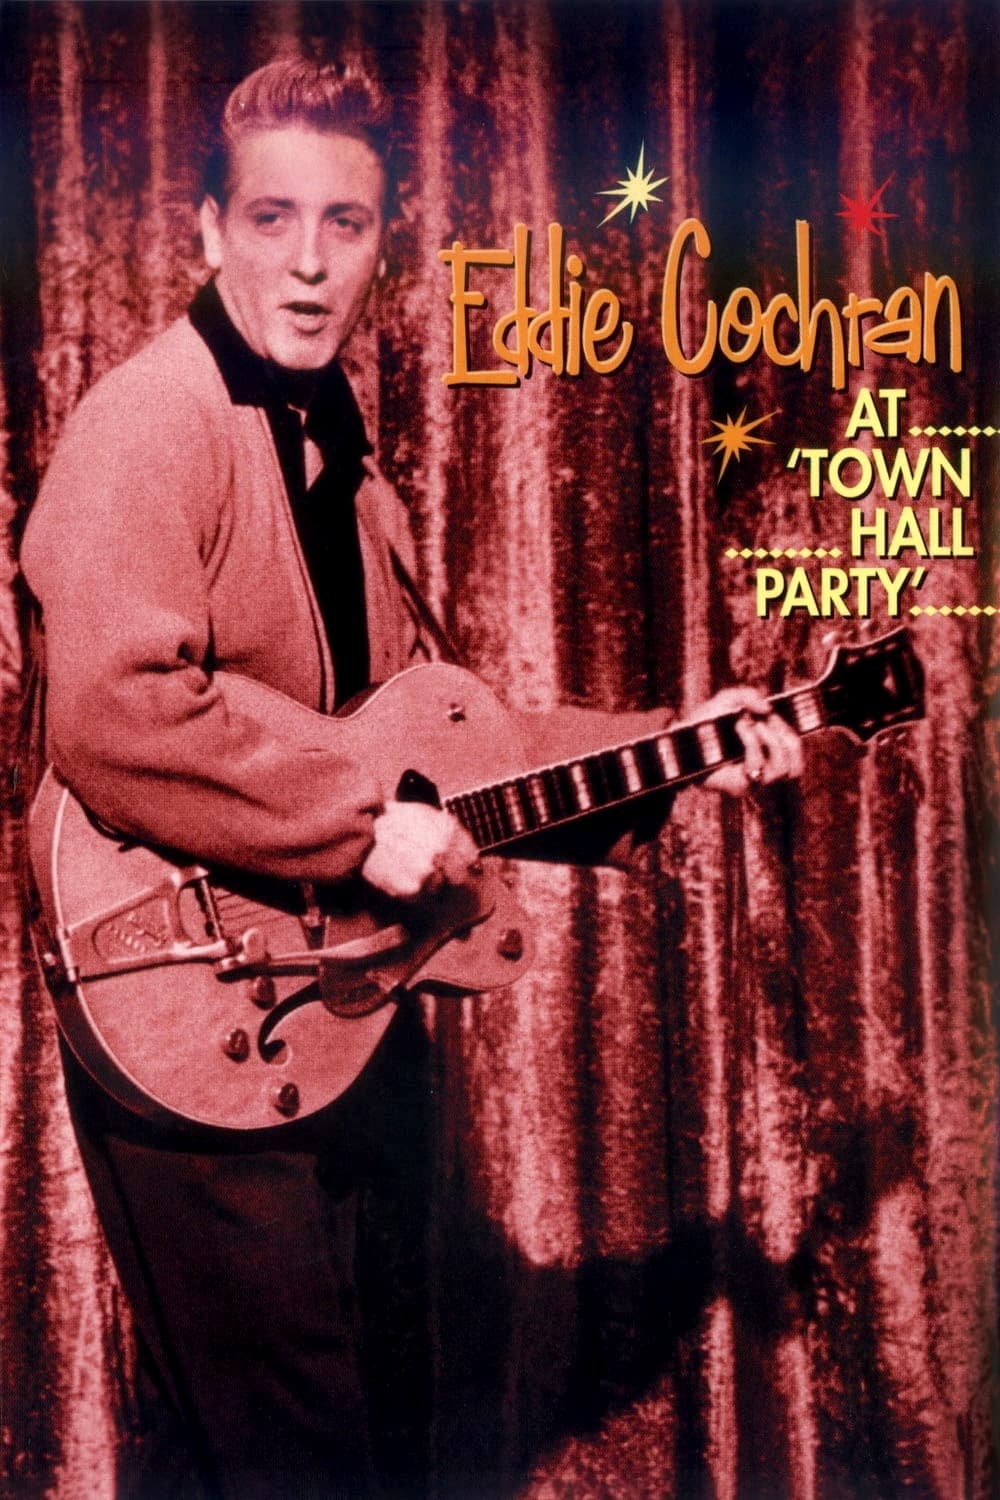 Eddie Cochran at Town Hall Party